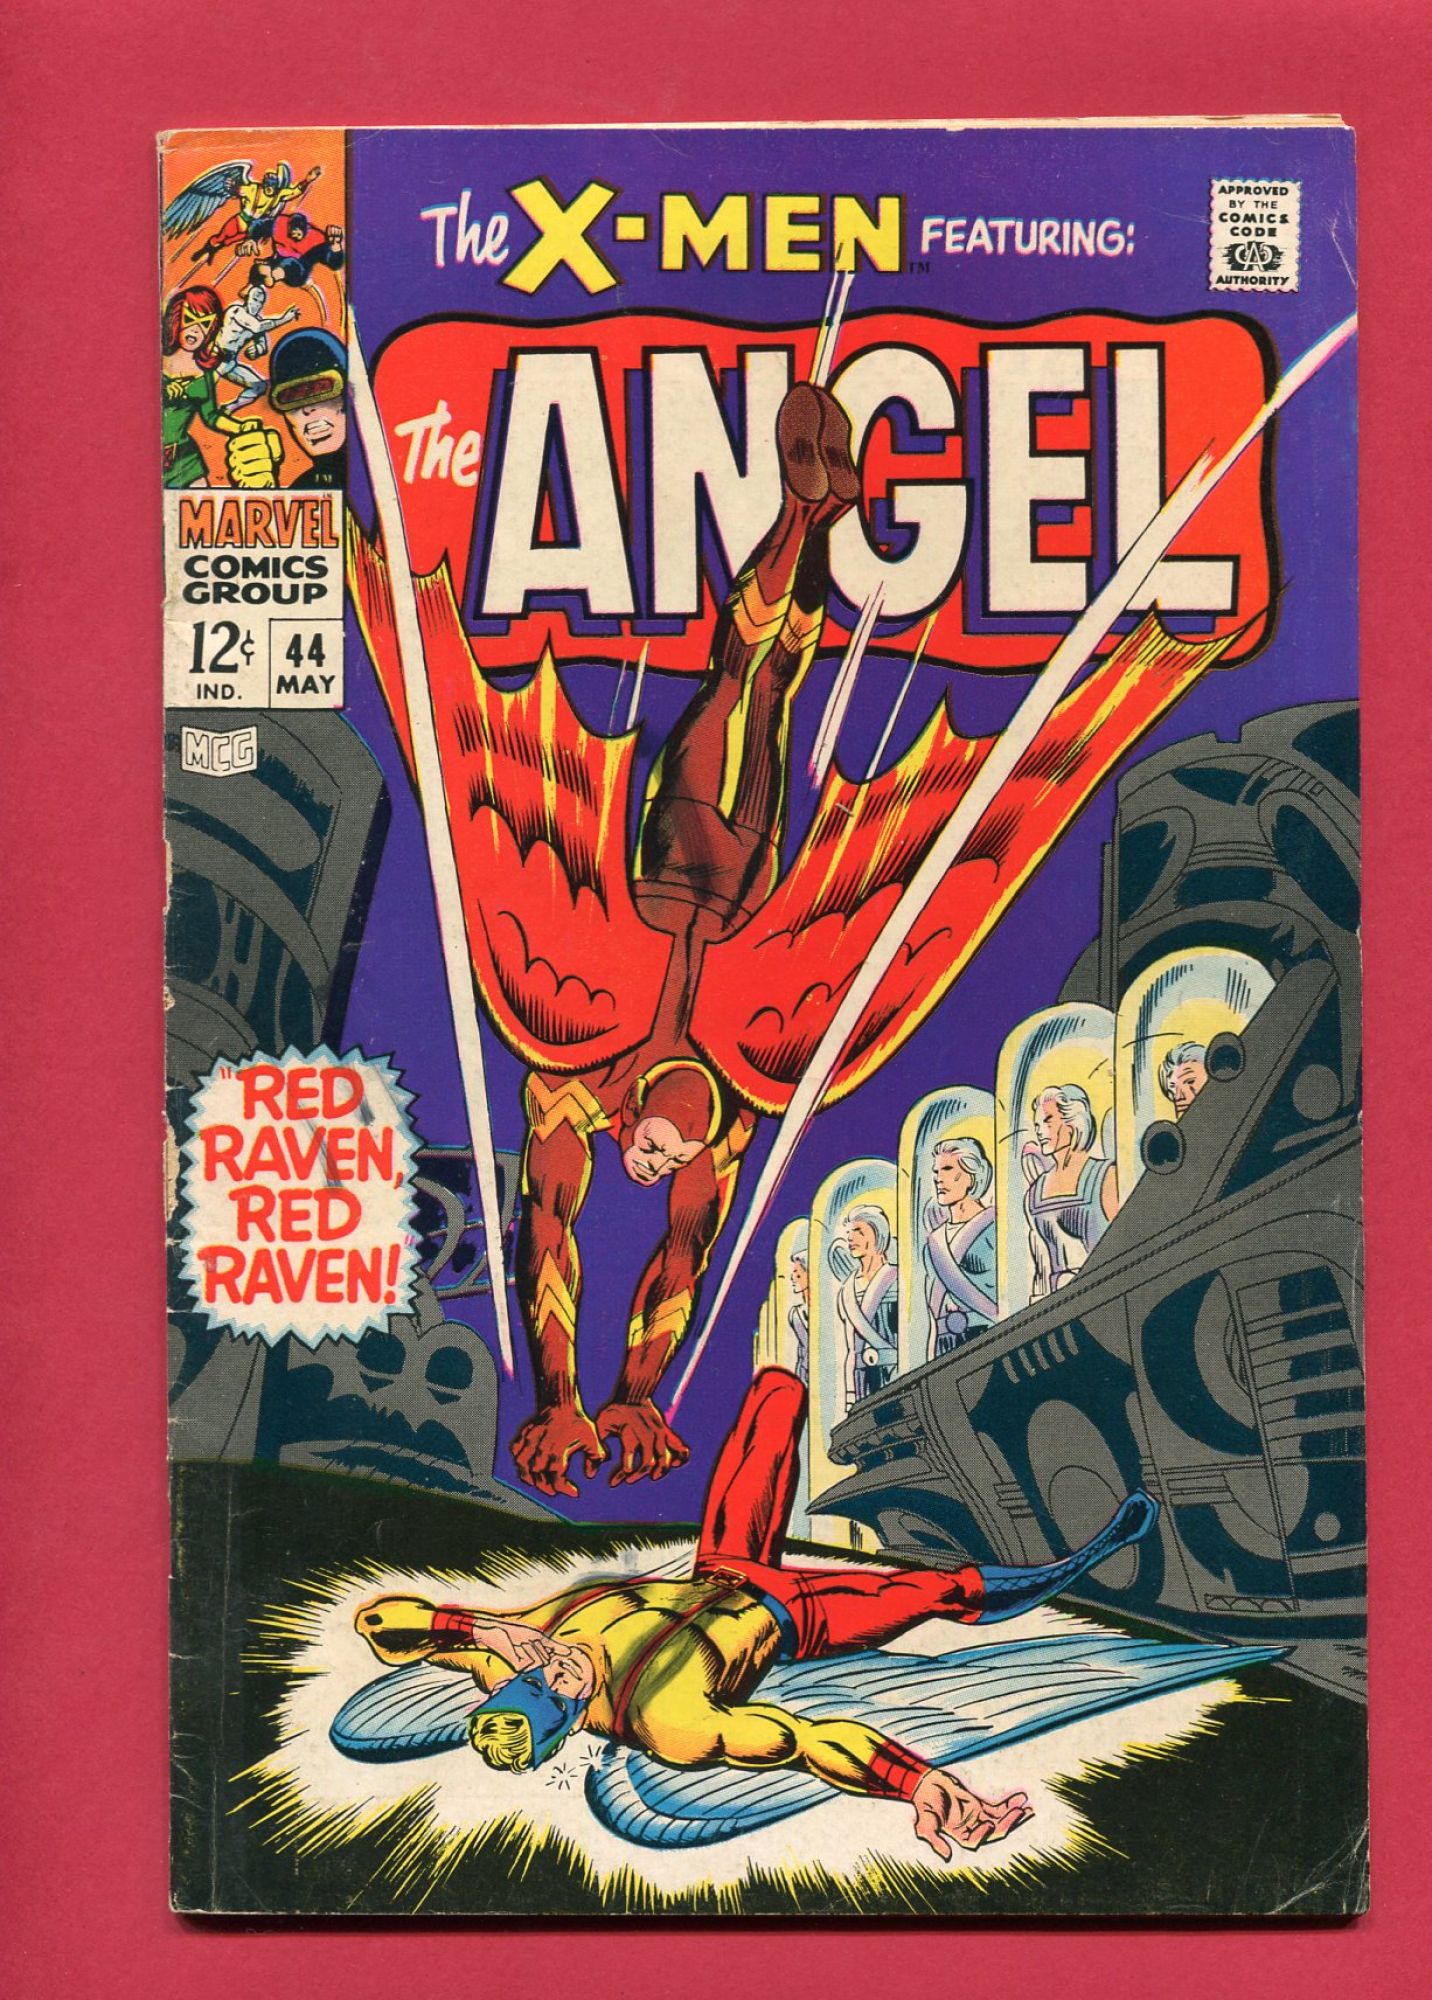 X-Men #44, May 1968, 3.0 GD/VG